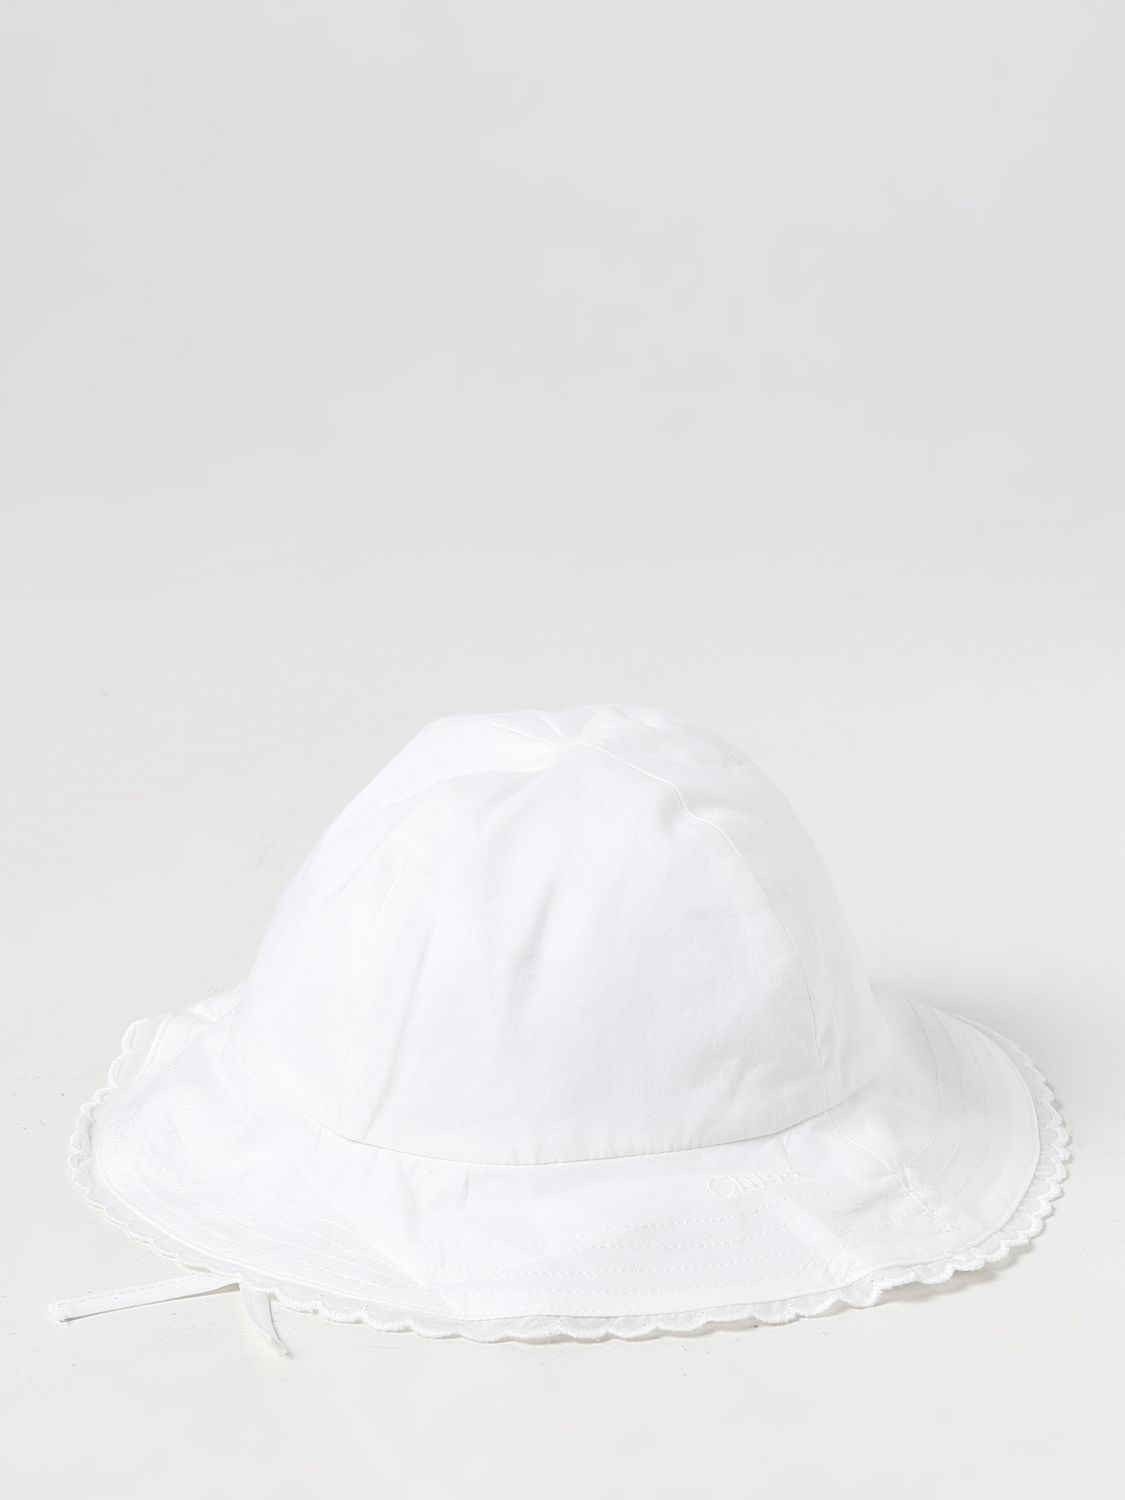 Chloé Girls' Hats  Kids Color White